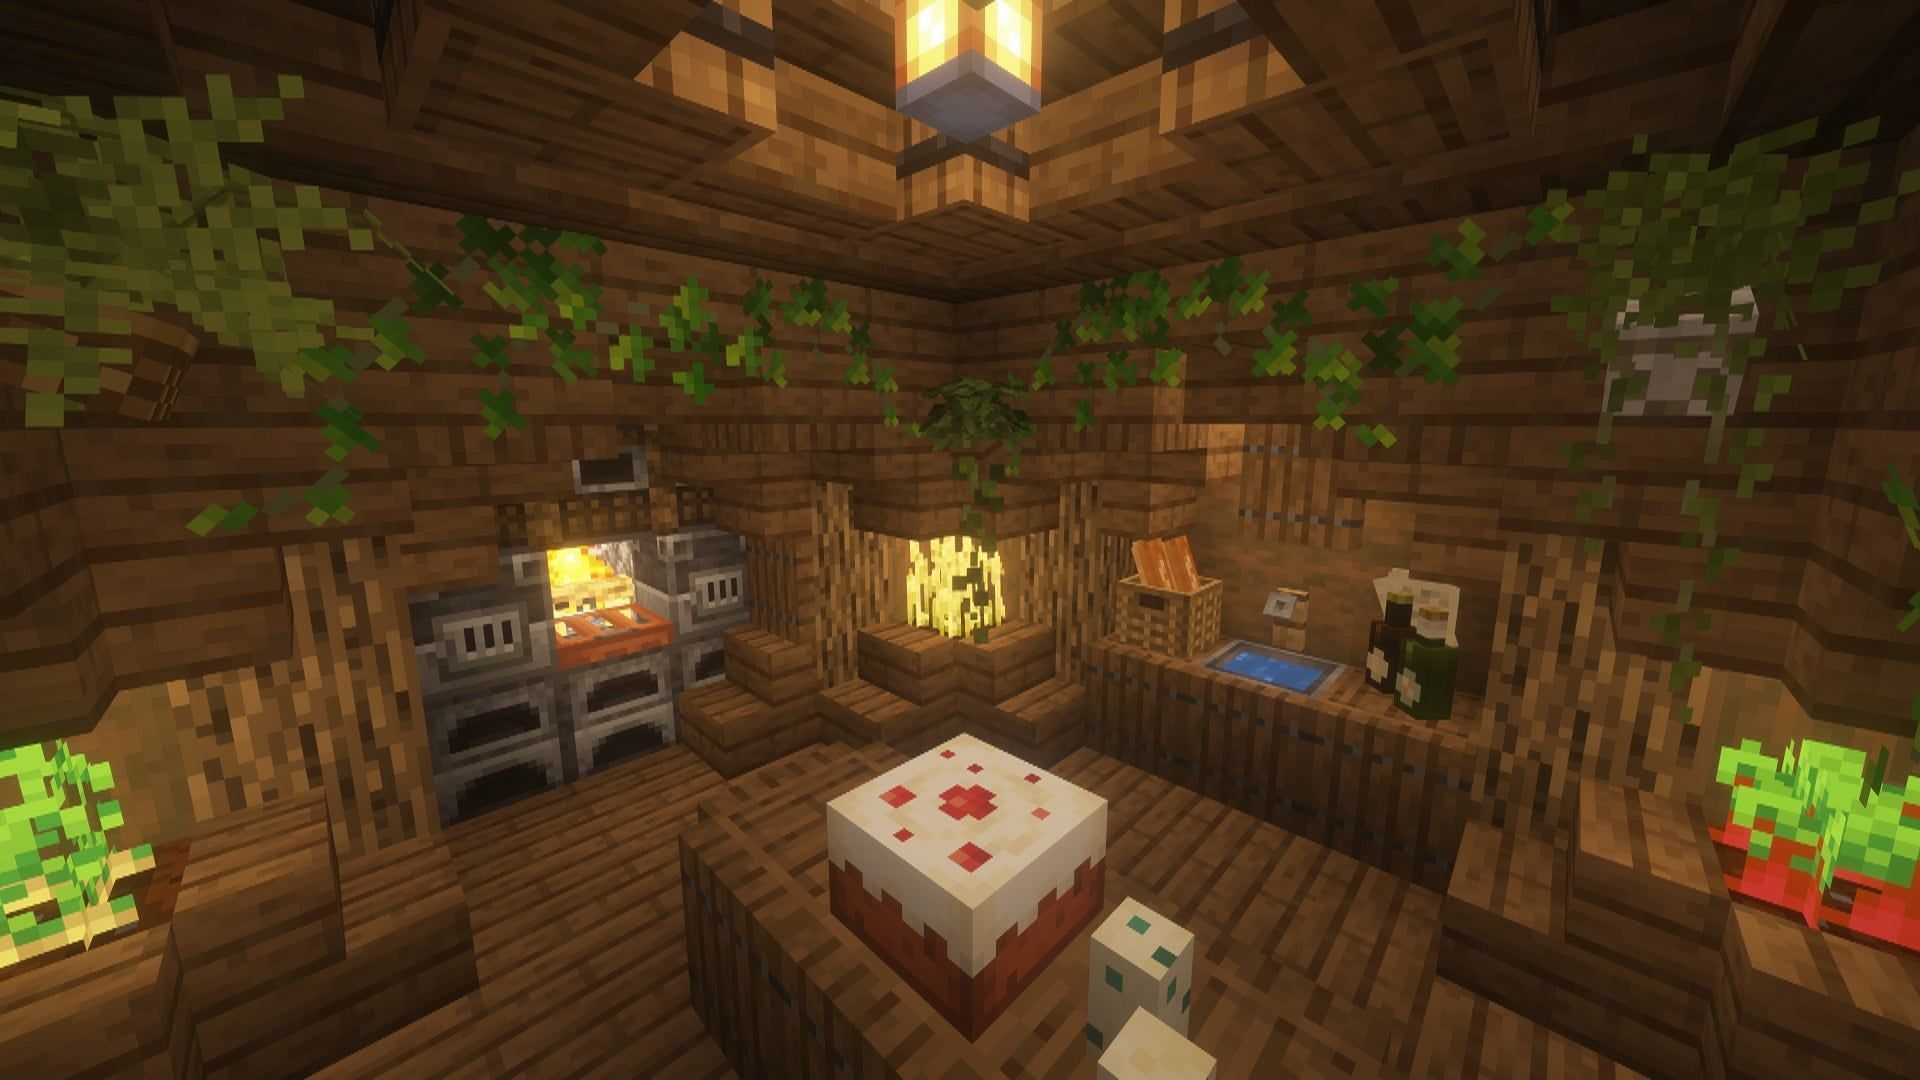 Kitchen in hobbit hole (Image via Reddit)